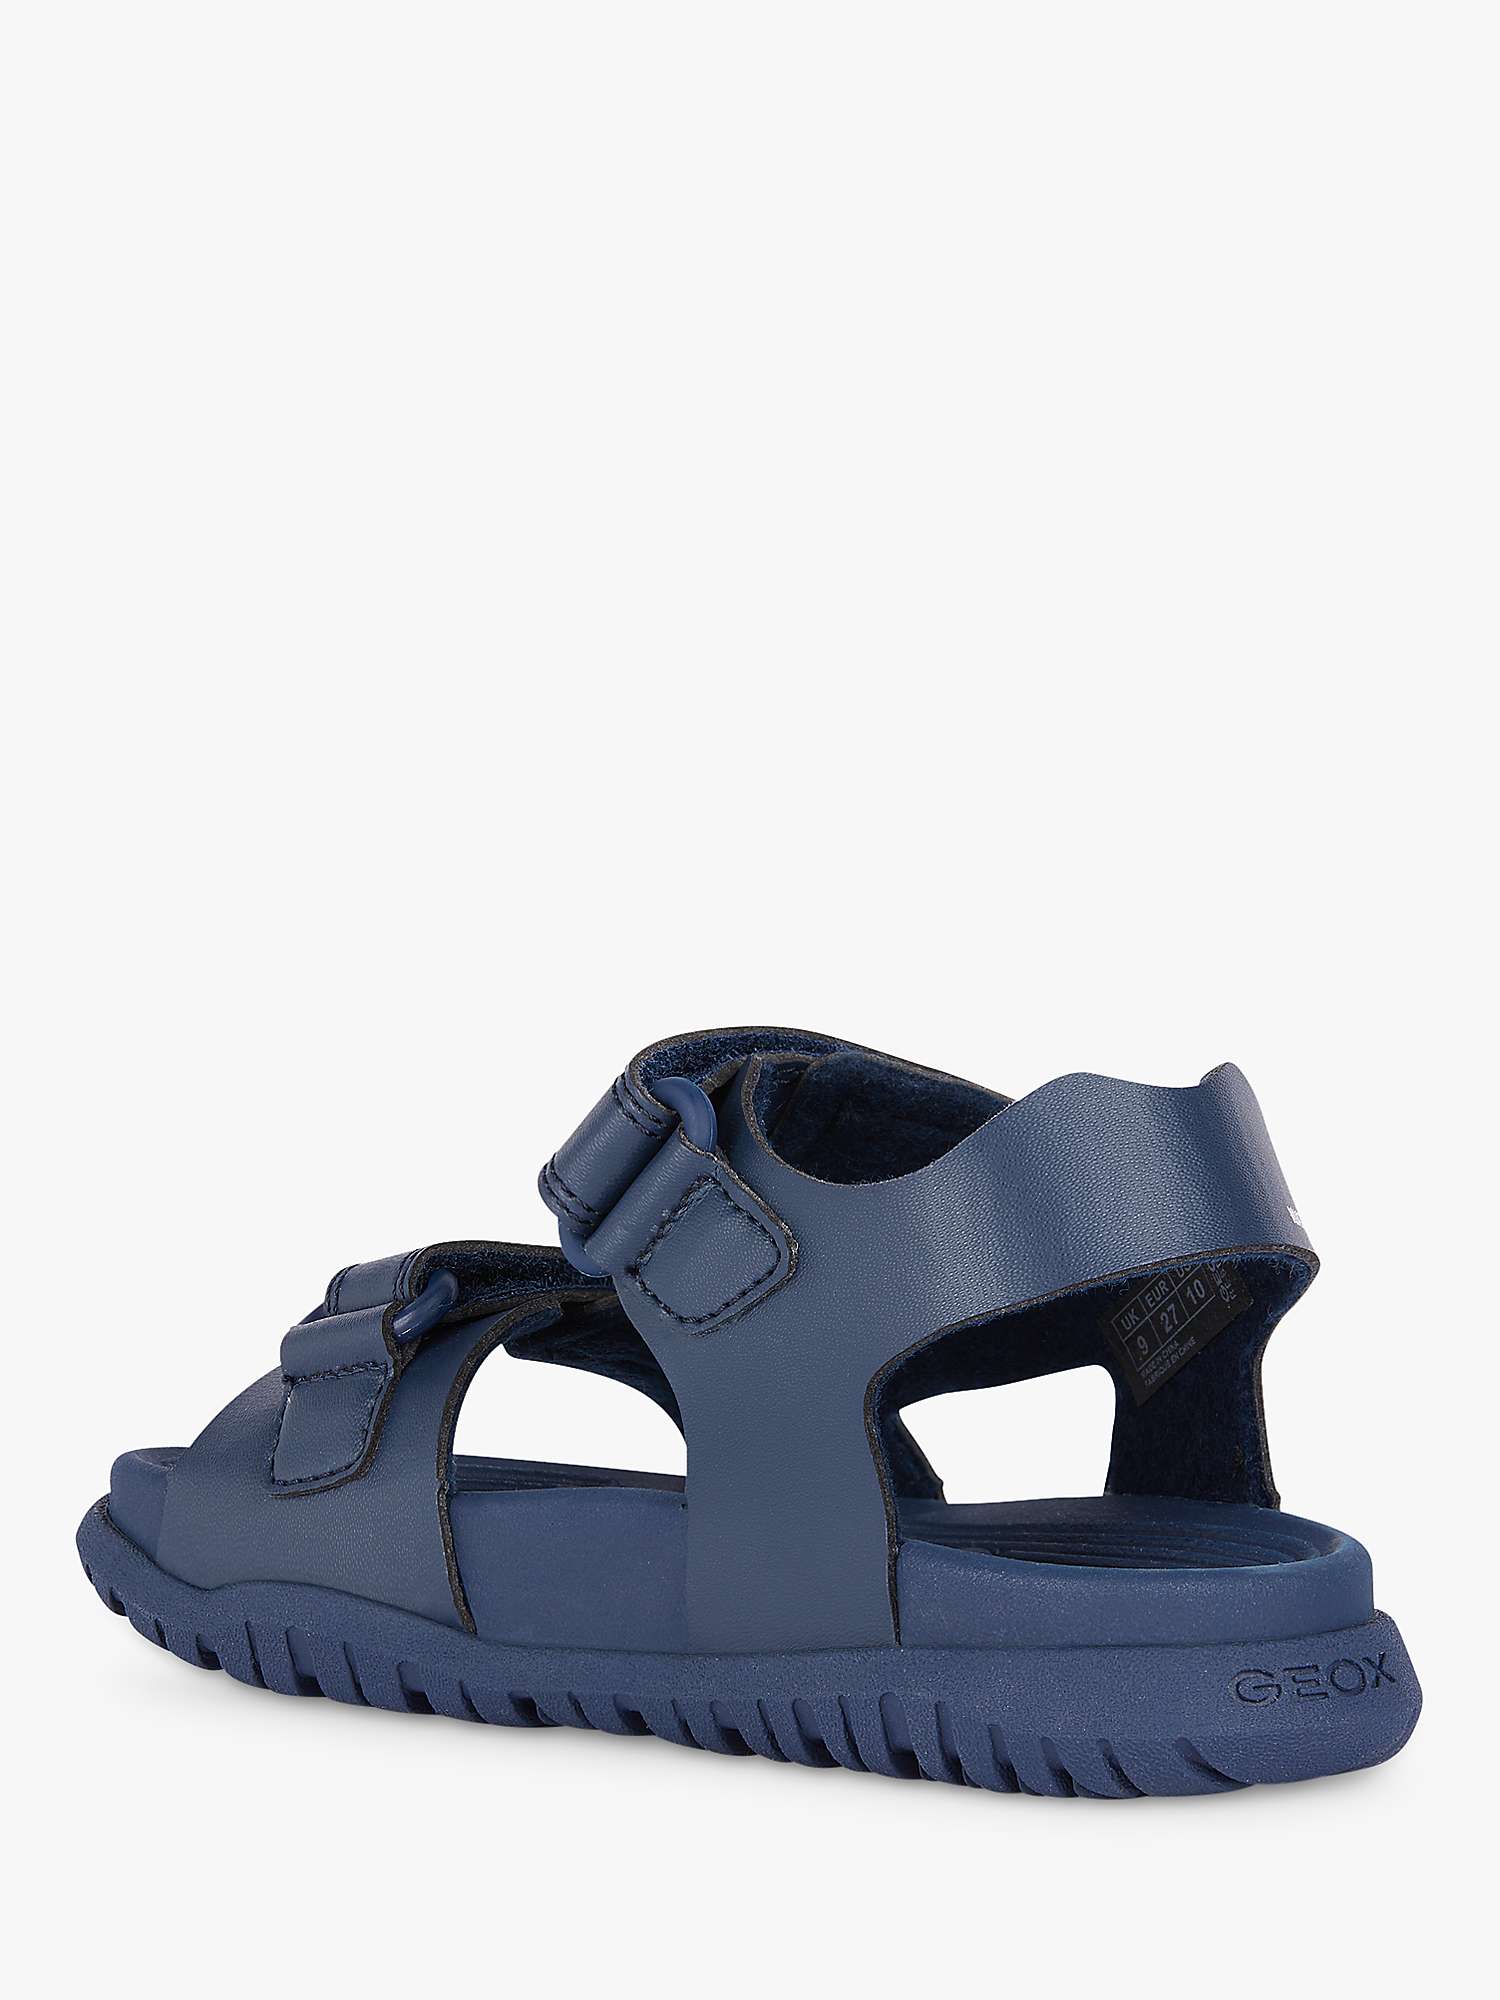 Buy Geox Kids' Fusbetto Water Resistant Sandals Online at johnlewis.com